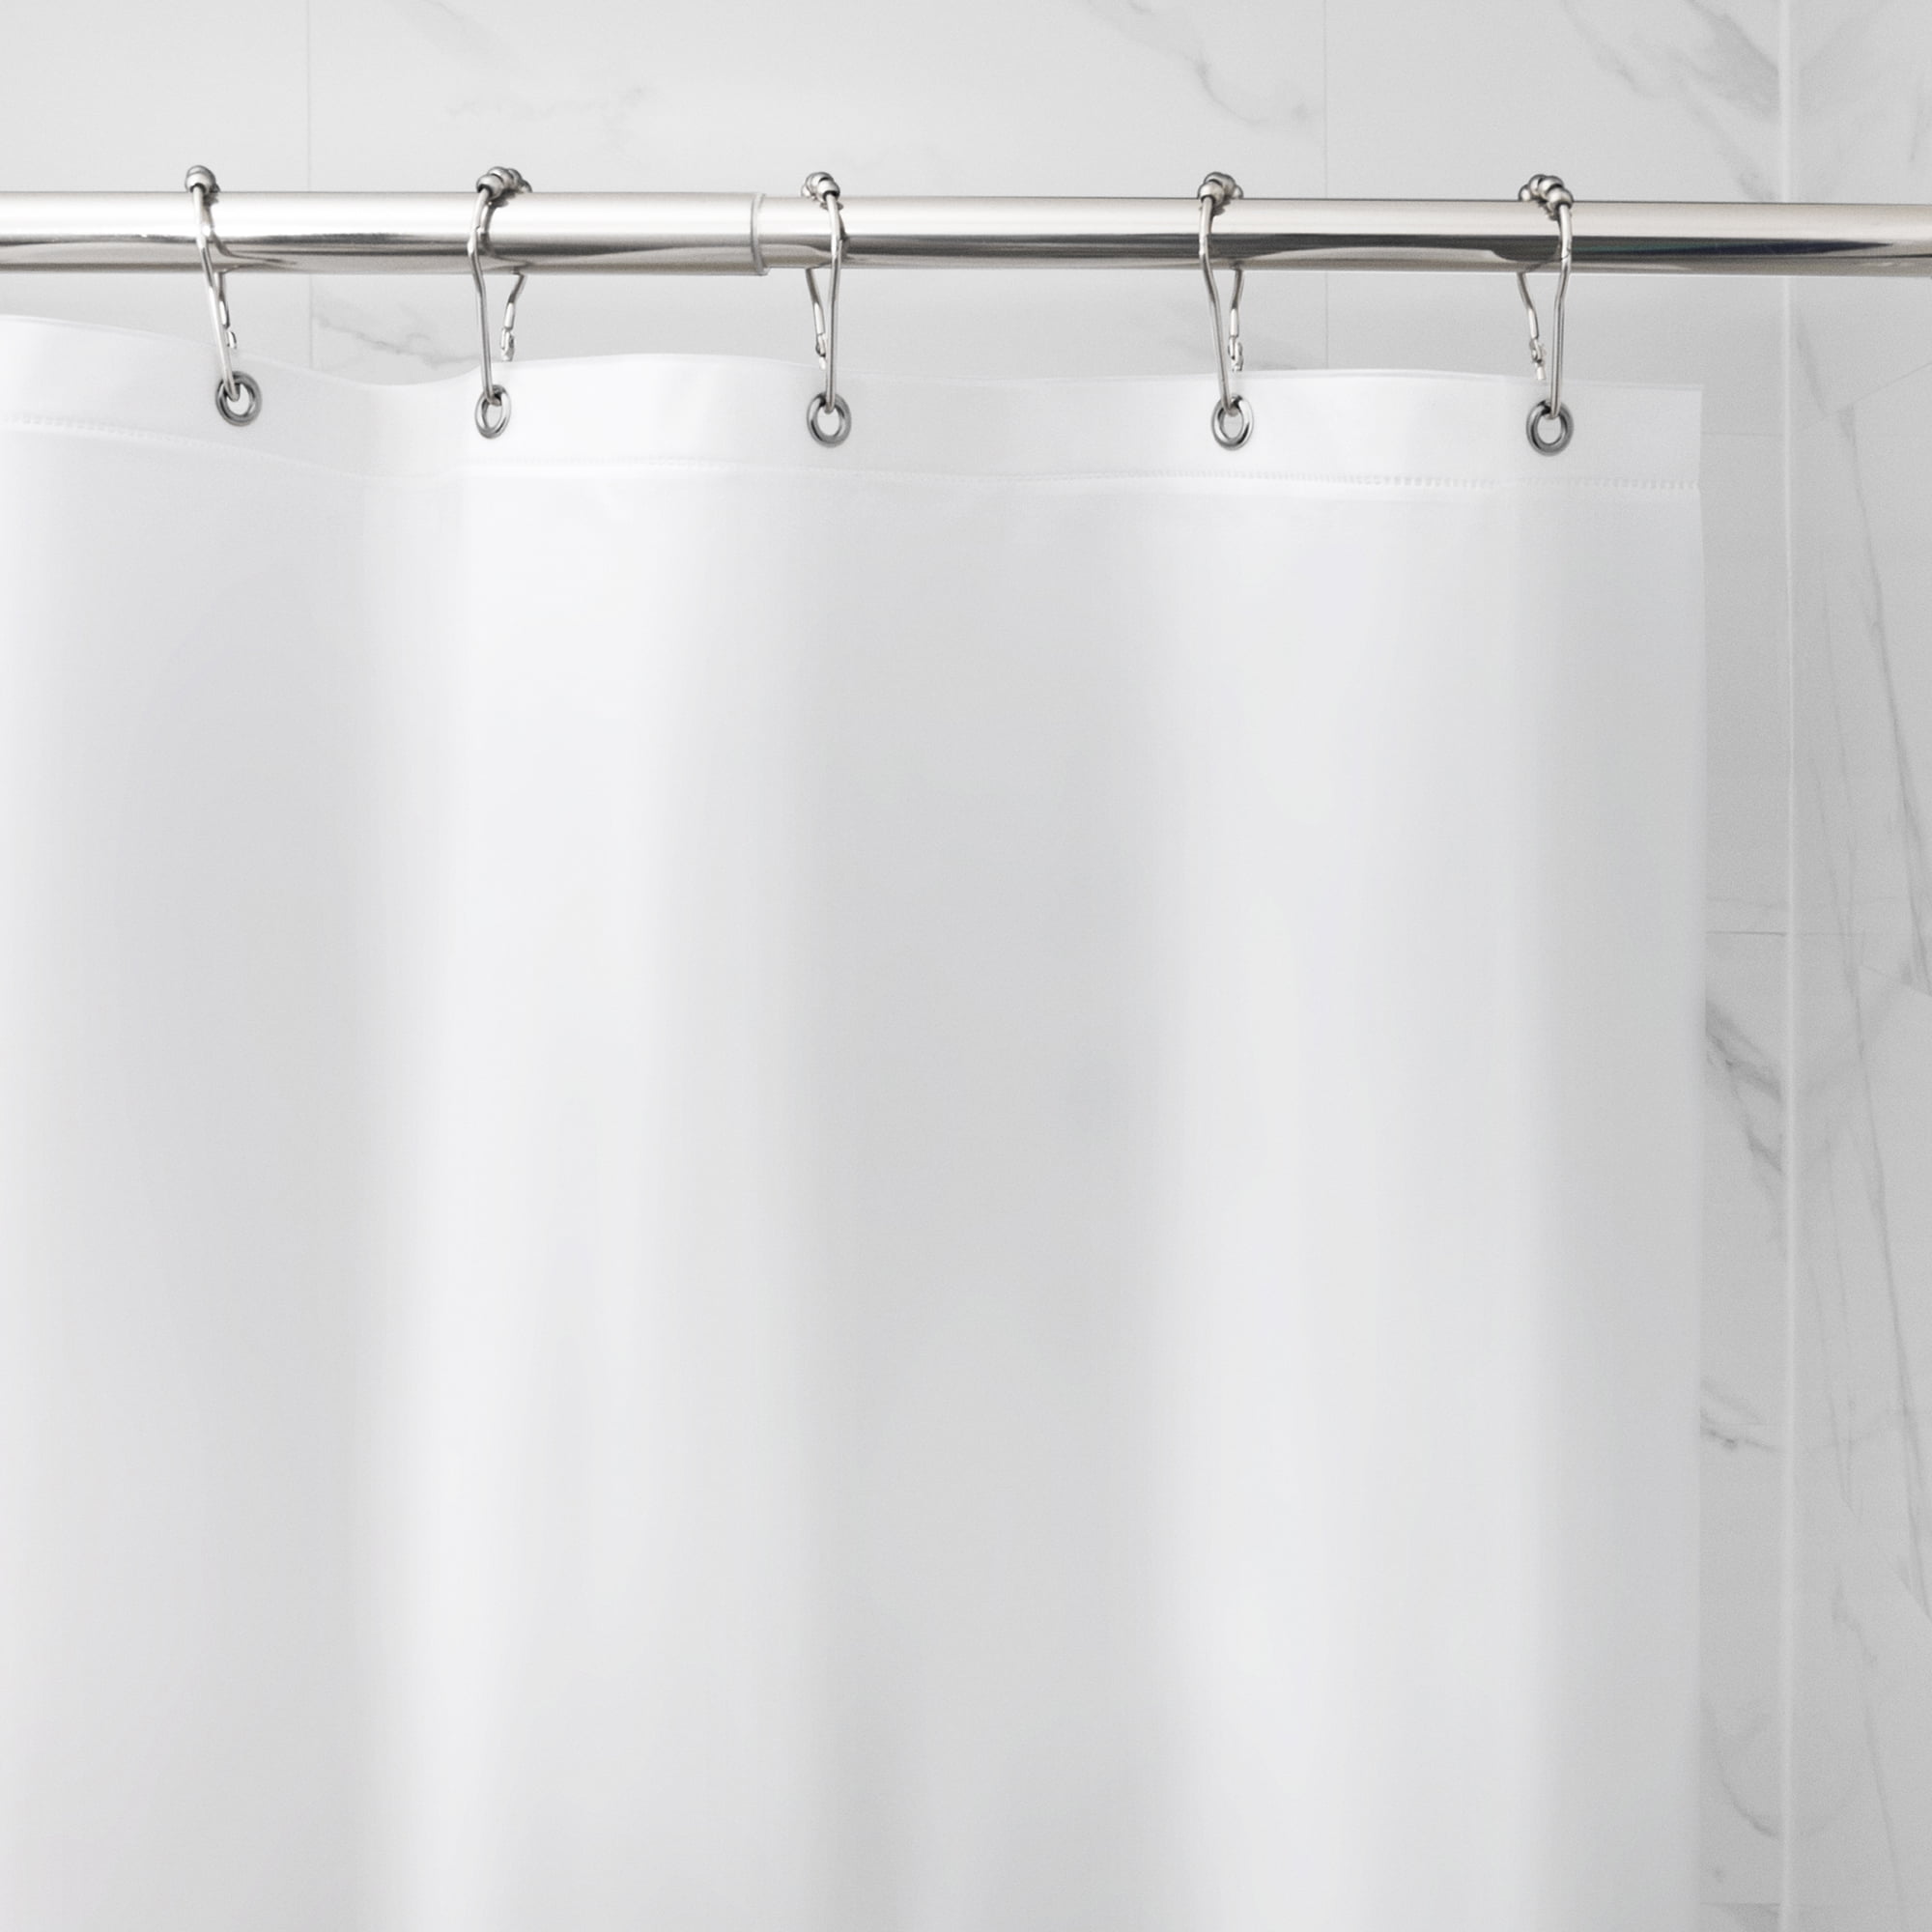 PEVA Water Splash Resistant Shower Curtain Plain Fabric Waterproof Bathroom 